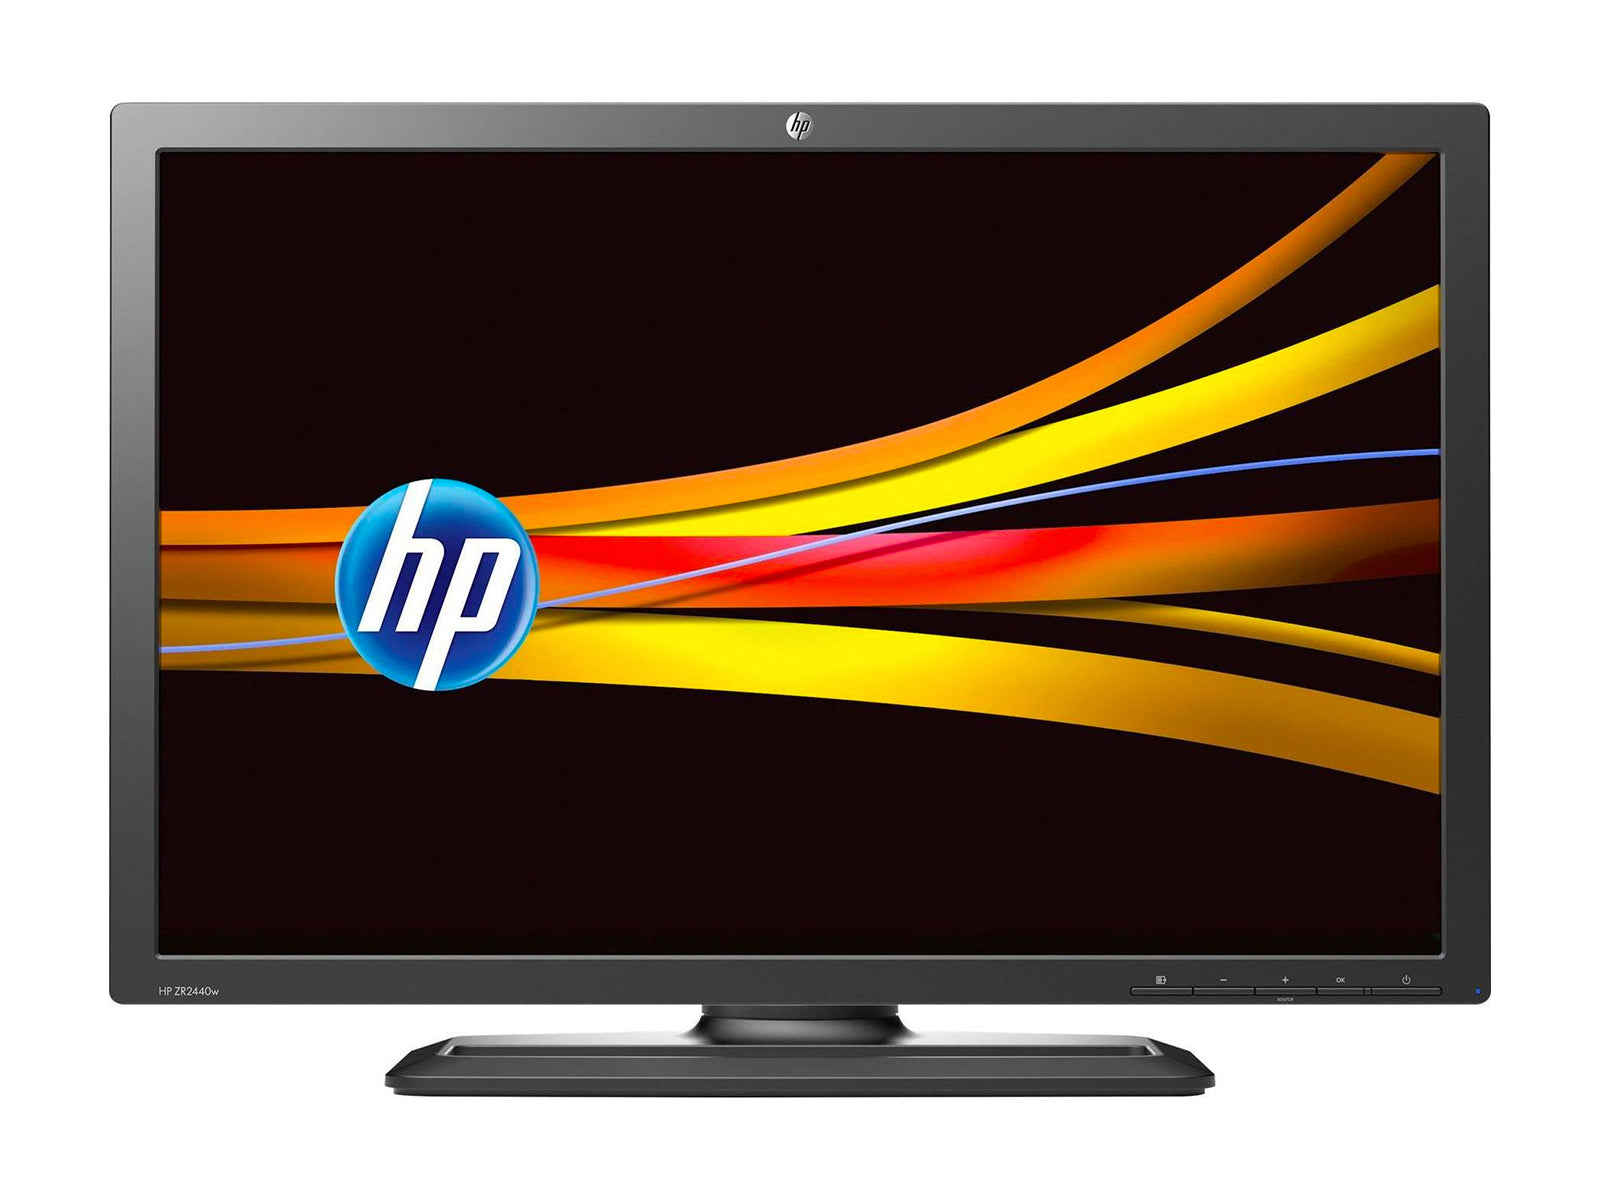 HP ZR2440w 24" WUXGA 1920x1200 LED Display Monitor (XW477A4#ABA) Monitors.com 